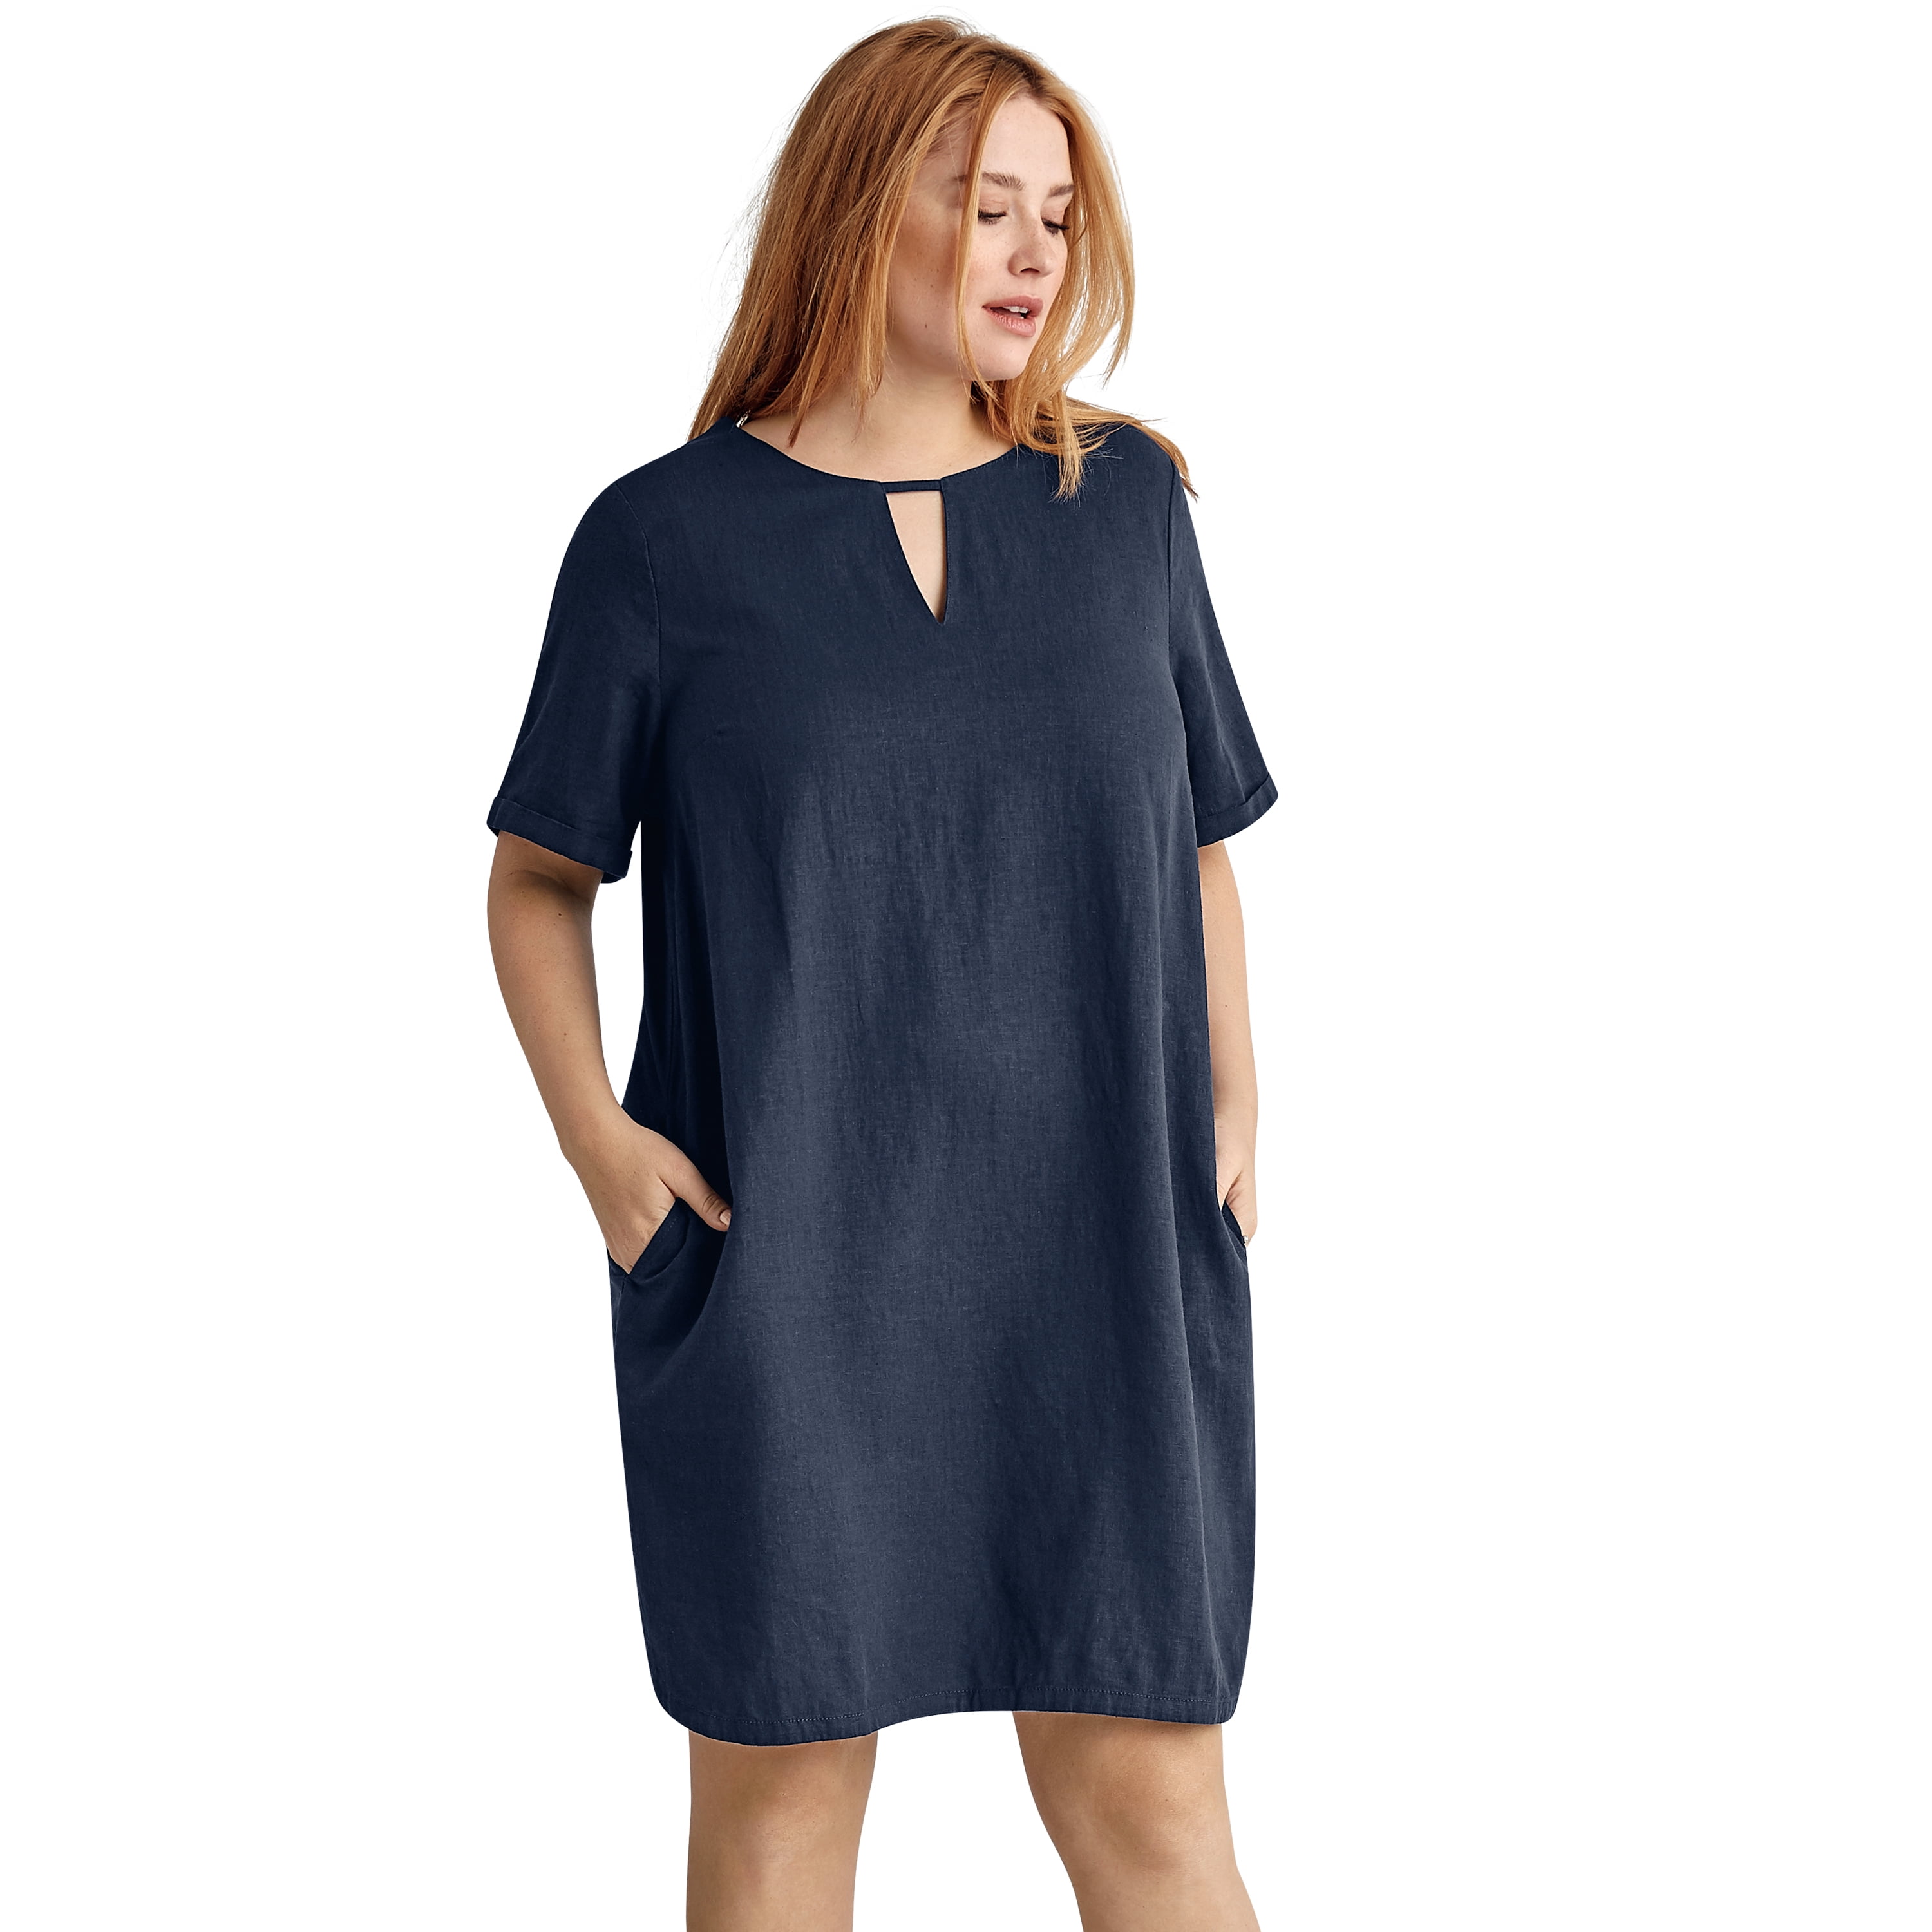 Ellos - ellos Women's Plus Size Linen-Blend A-Line Dress - Walmart.com ...